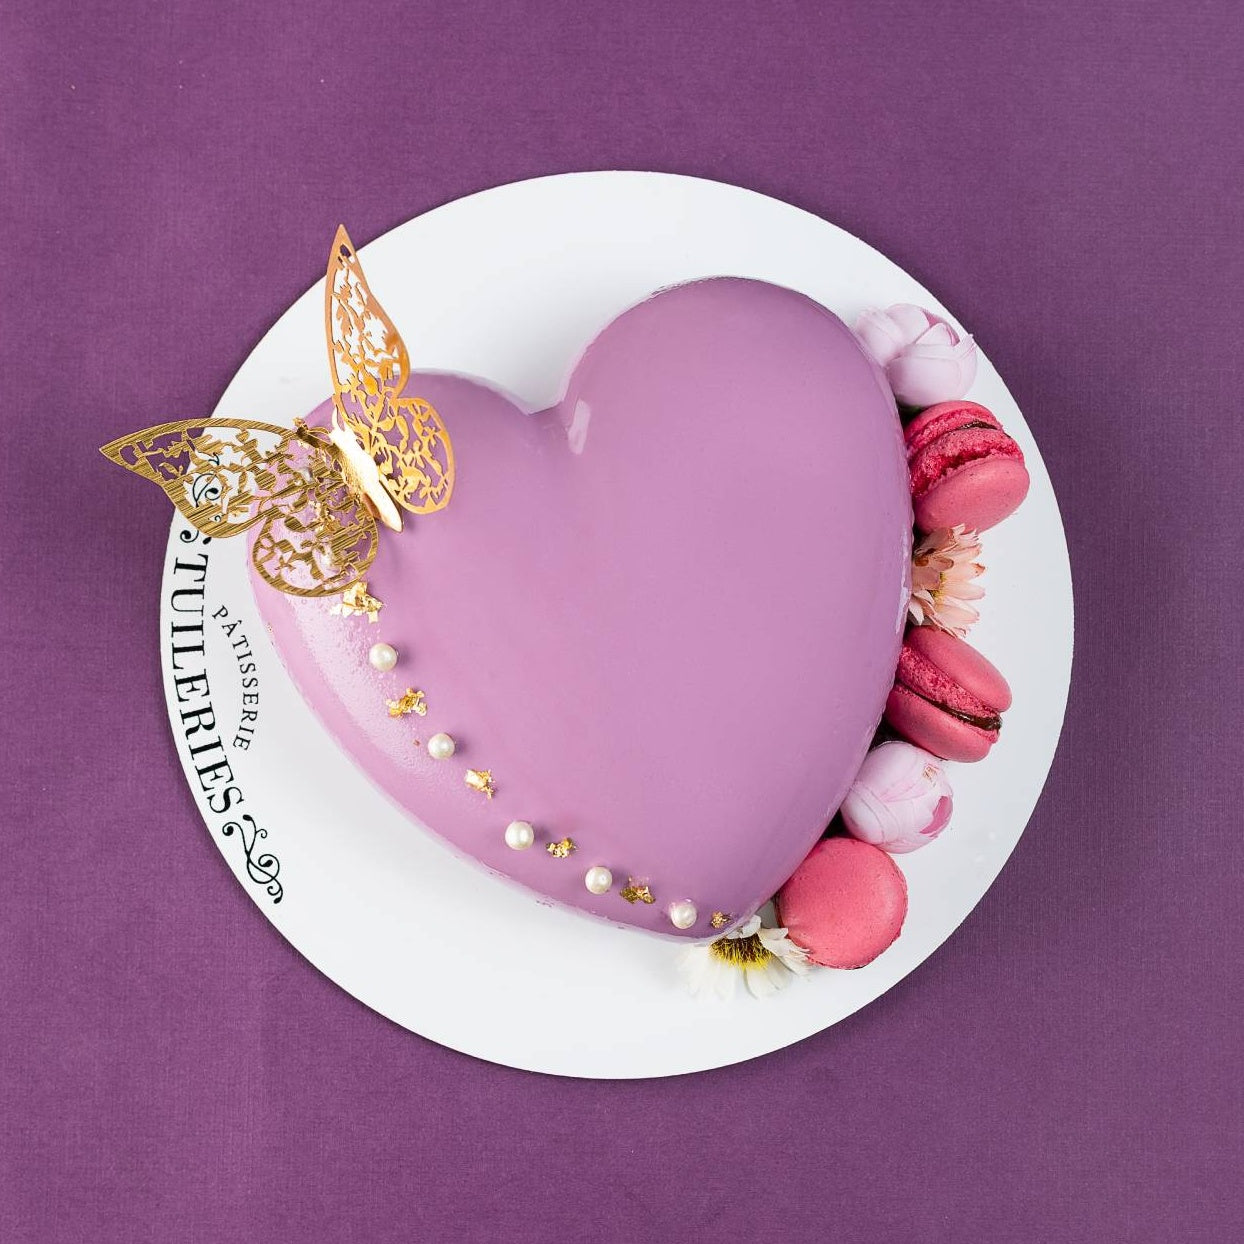 Tuileries Customized  "Love Cake" (650-700 grams)